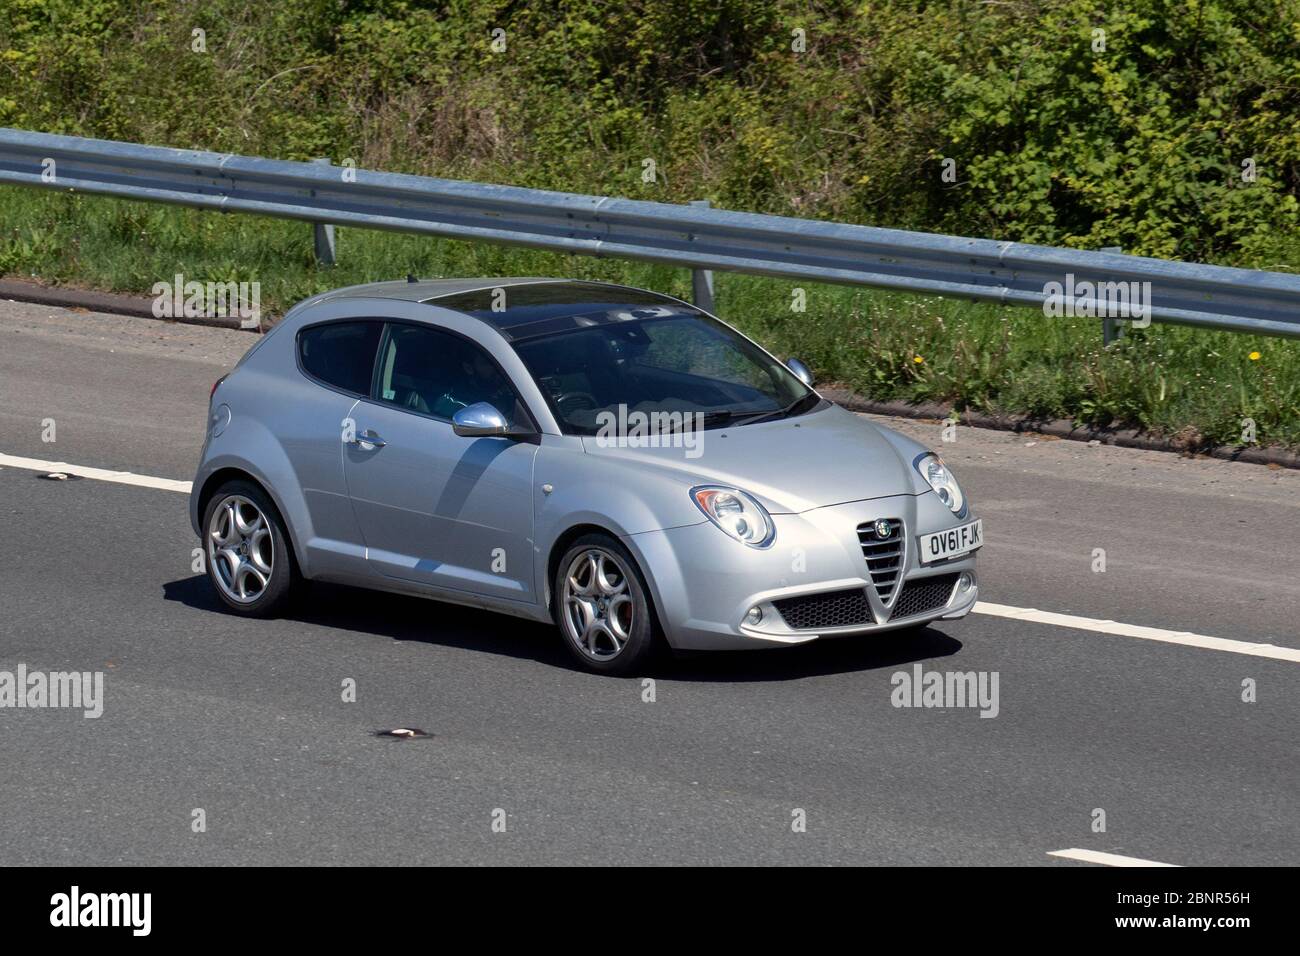 Alfa Romeo Mito 1.4 TB MultiAir; Vehicular traffic moving vehicles, driving vehicle on UK roads, motors, motoring on the M6 motorway highway Stock Photo